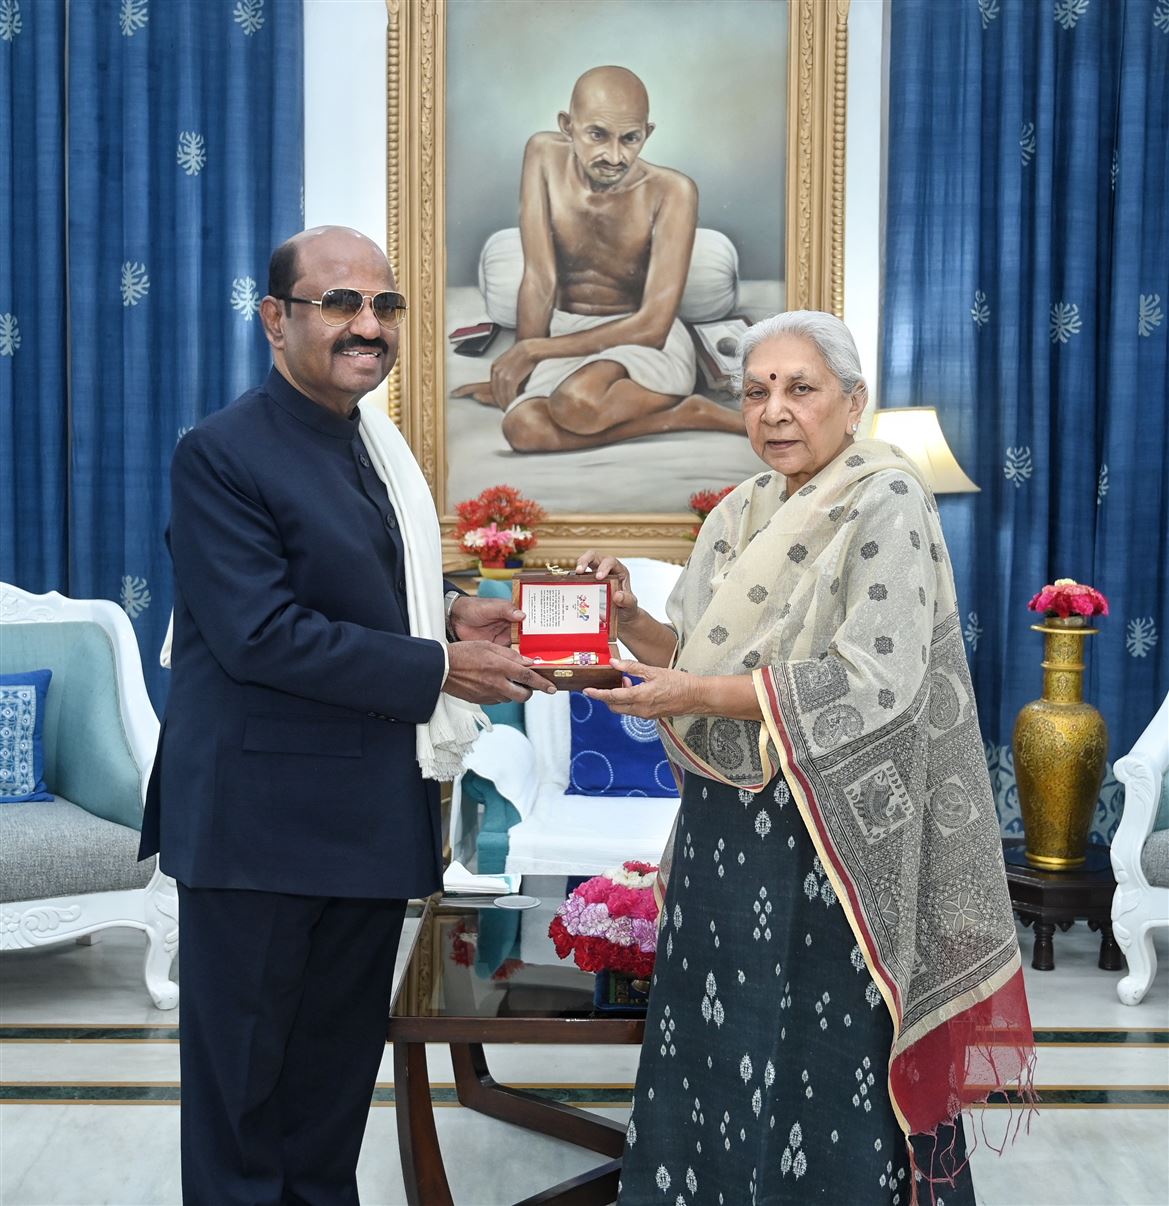 Courtesy meeting of Governor of West Bengal Dr C V Anand Bose at Raj Bhavan Lucknow with Governor Smt Anandiben Patel today/राज्यपाल श्रीमती आनंदीबेन पटेल जी से आज राजभवन, लखनऊ में पश्चिम बंगाल के राज्यपाल डा0 सी0वी0 आनंद बोस जी की शिष्टाचार भेंट